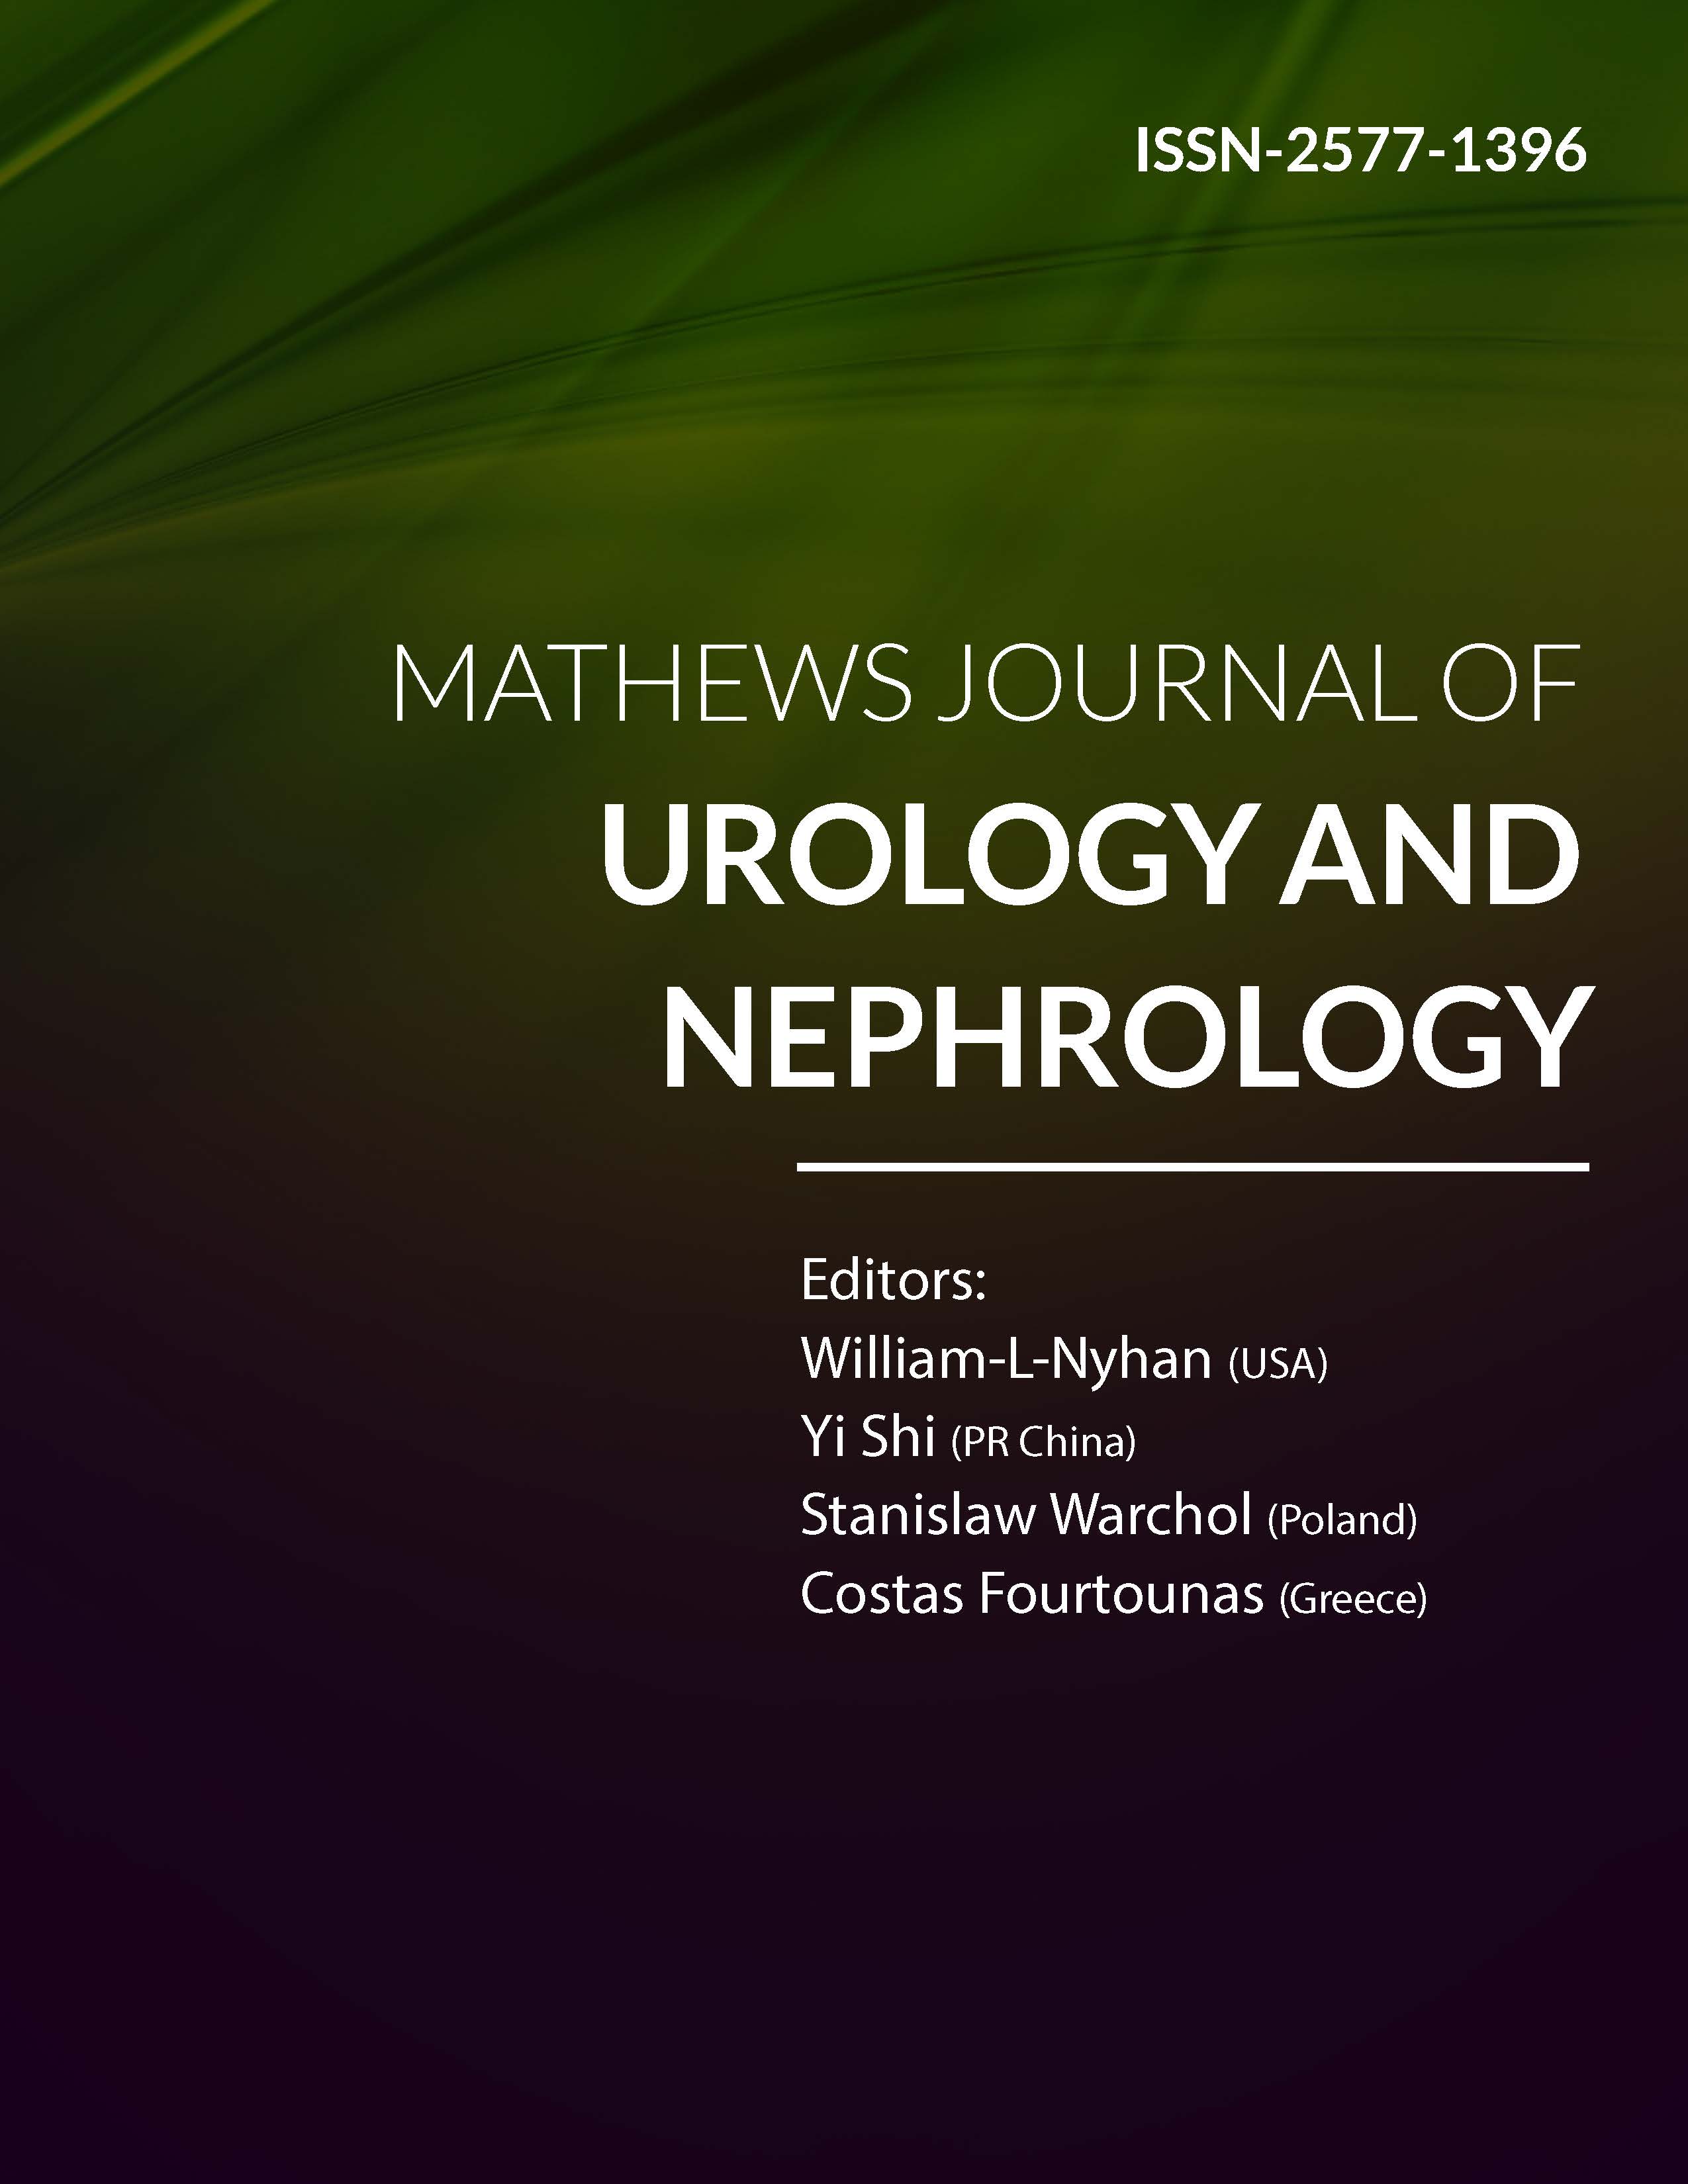 Mathews Journal of Urology and Nephrology